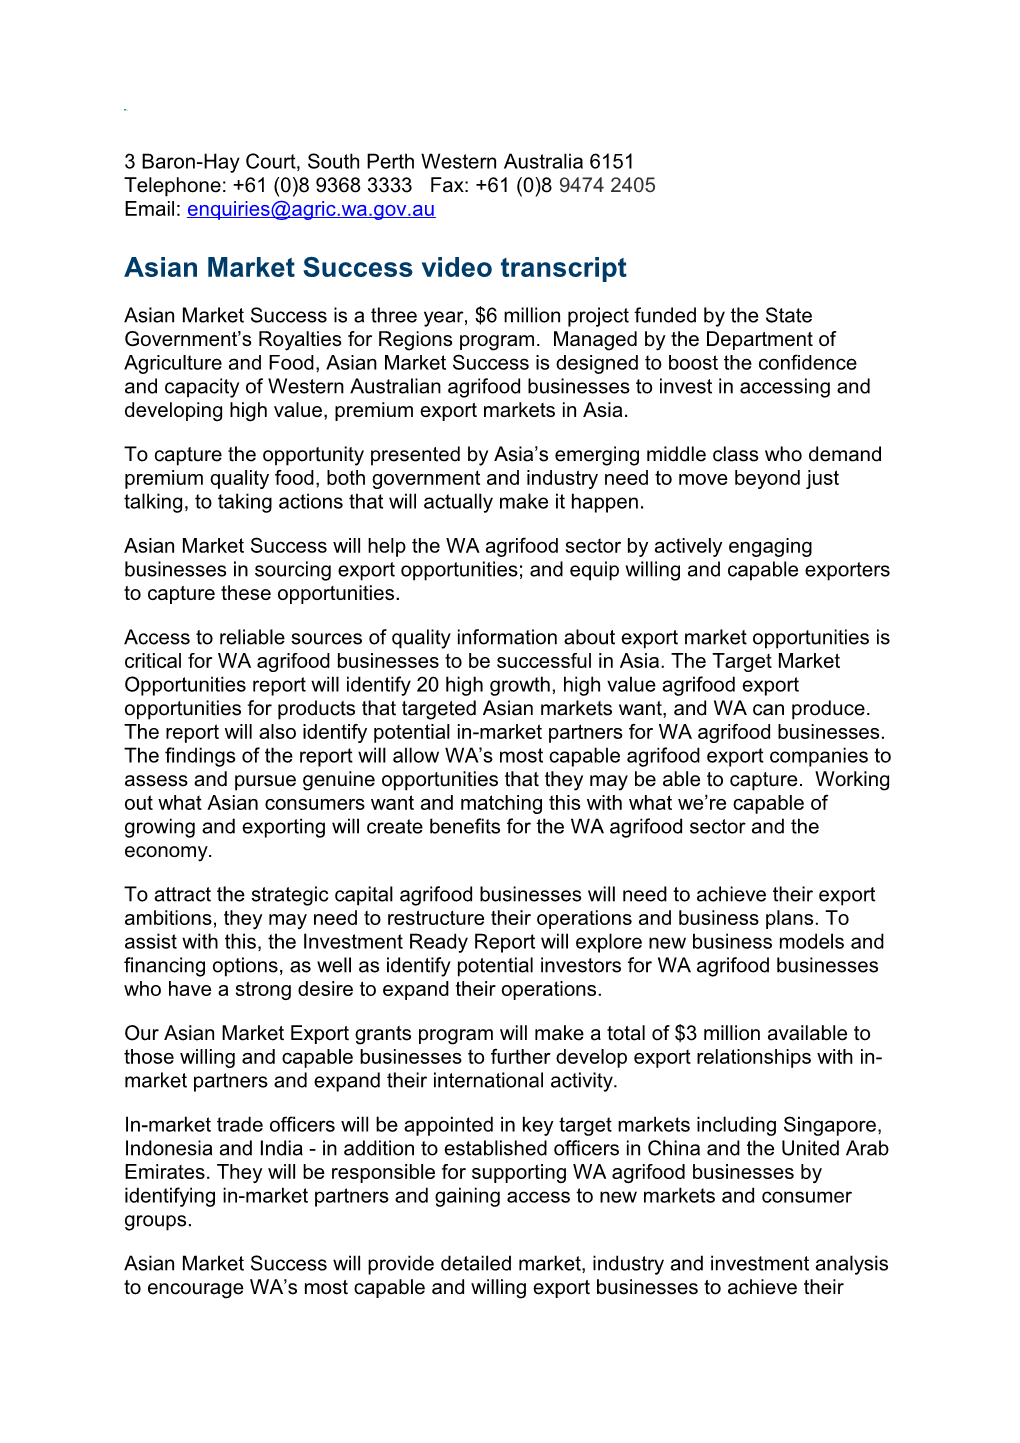 Asian Market Success Video Transcript